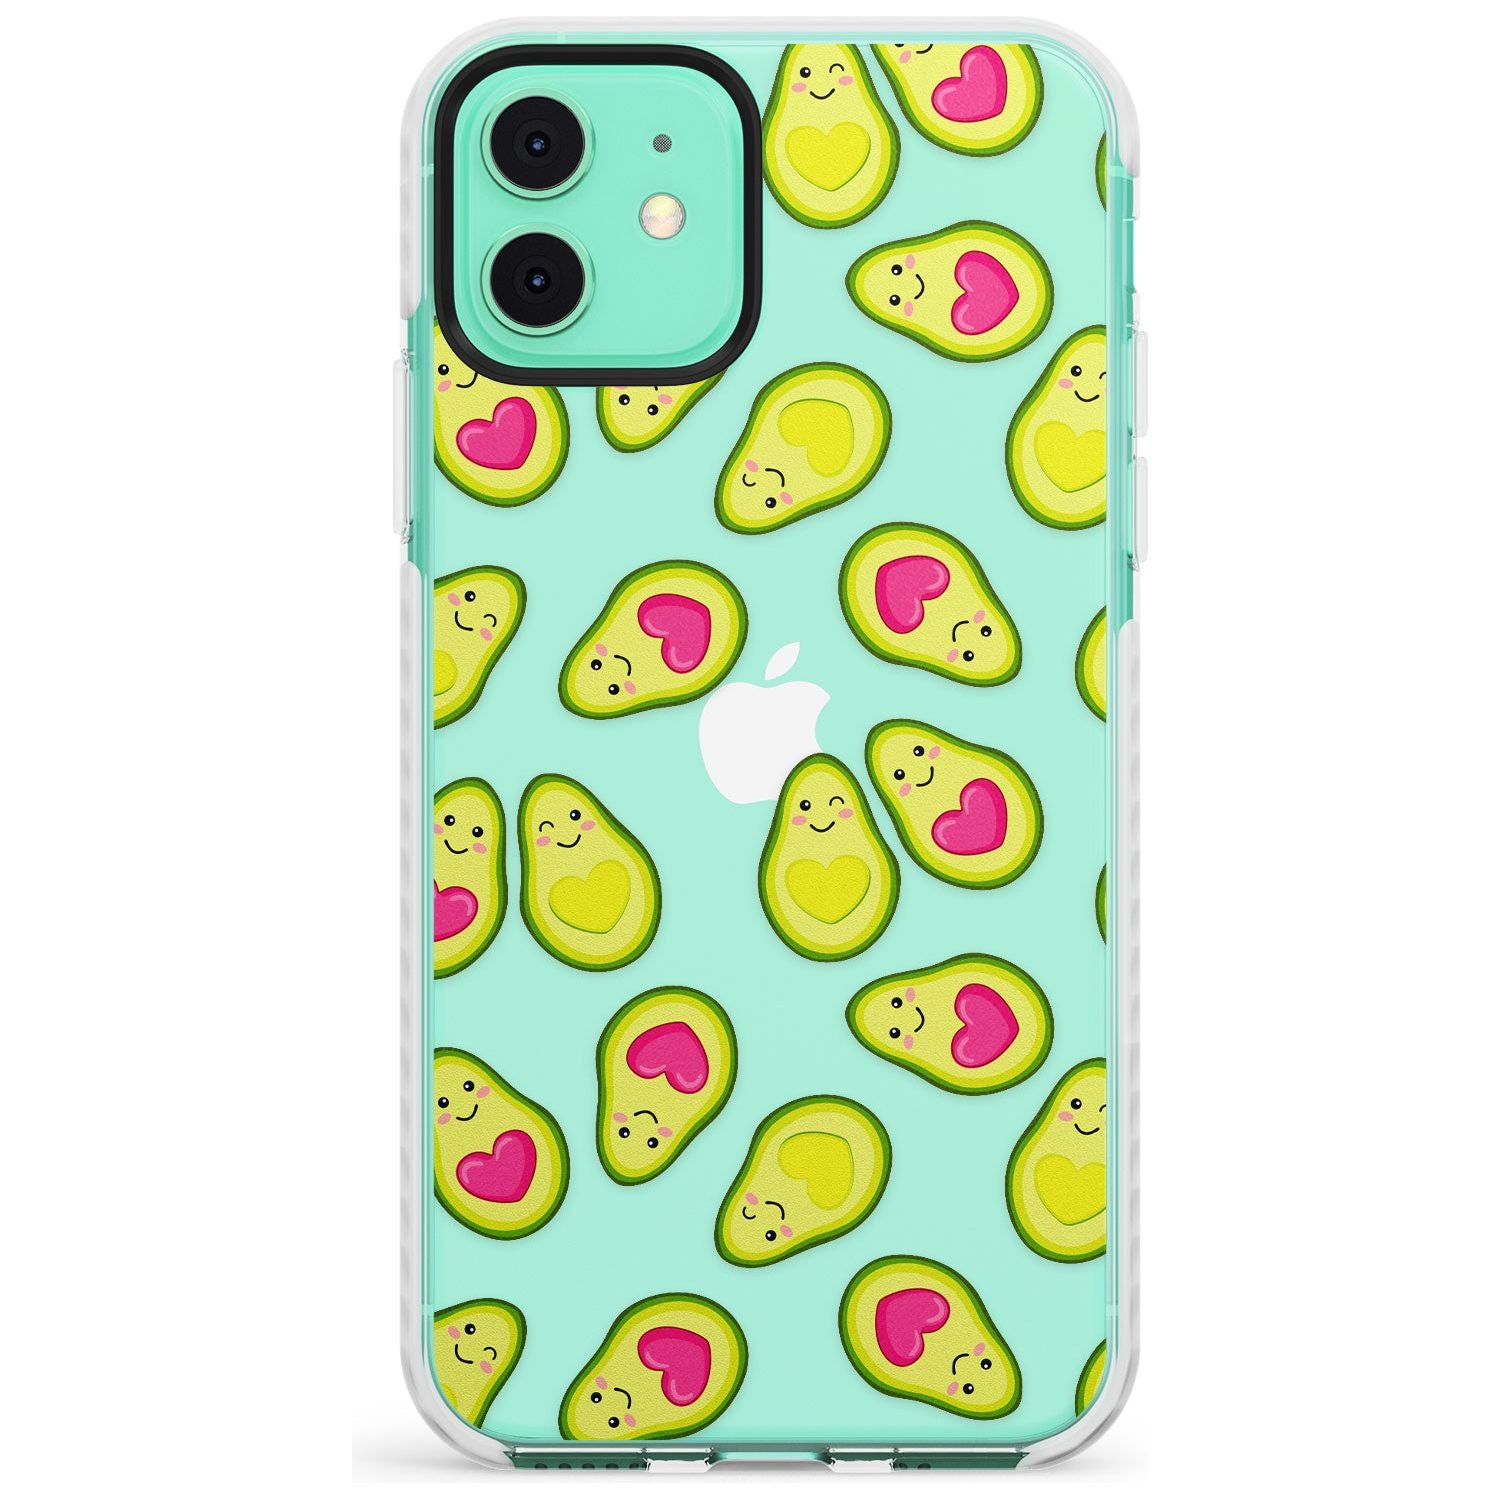 Avocado Love Impact Phone Case for iPhone 11